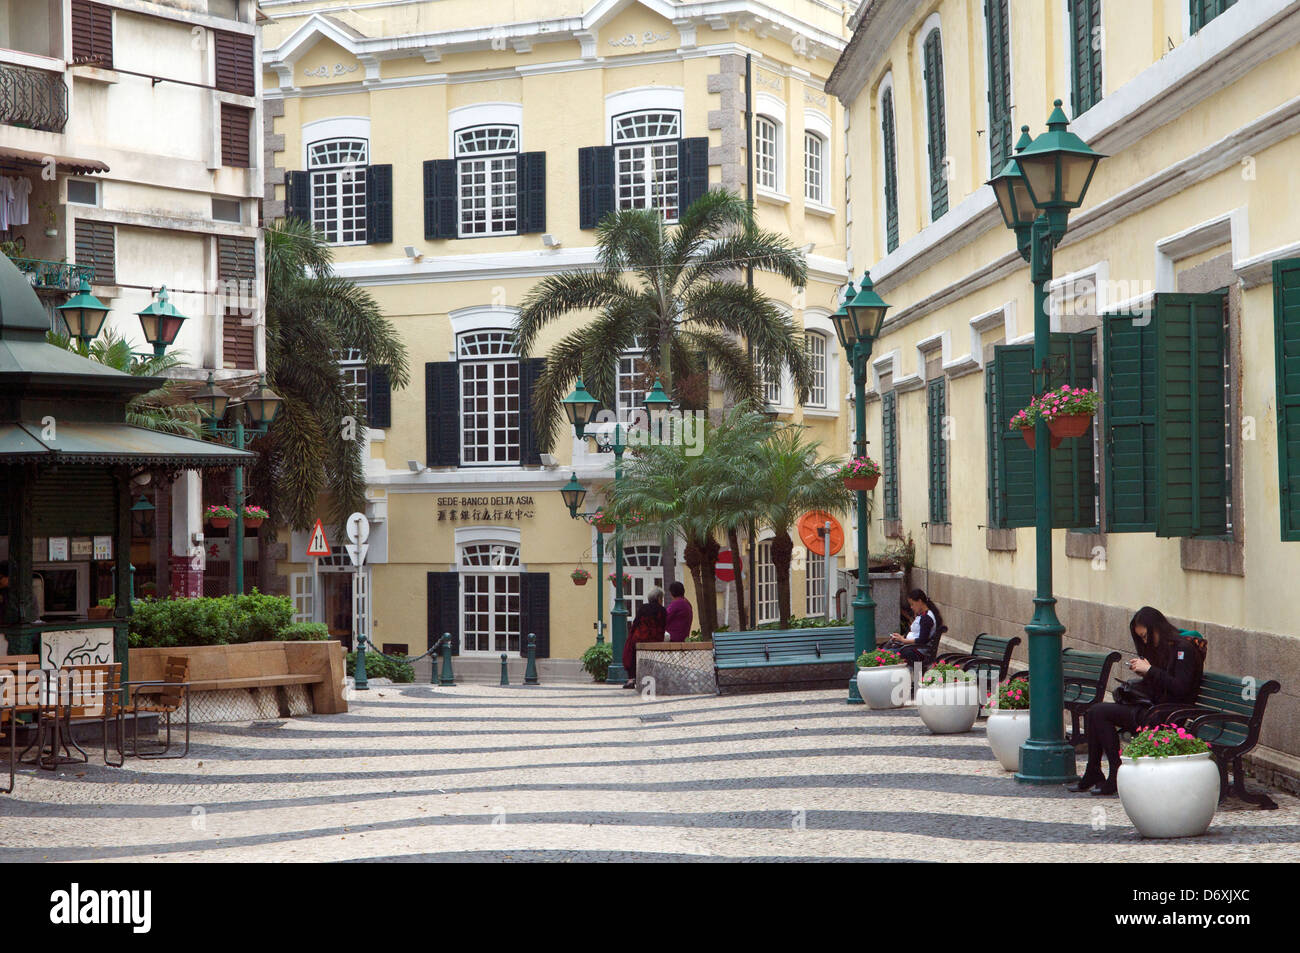 Alte portugiesische Kolonial-Architektur St. Augustine Platz Macau Stockfoto